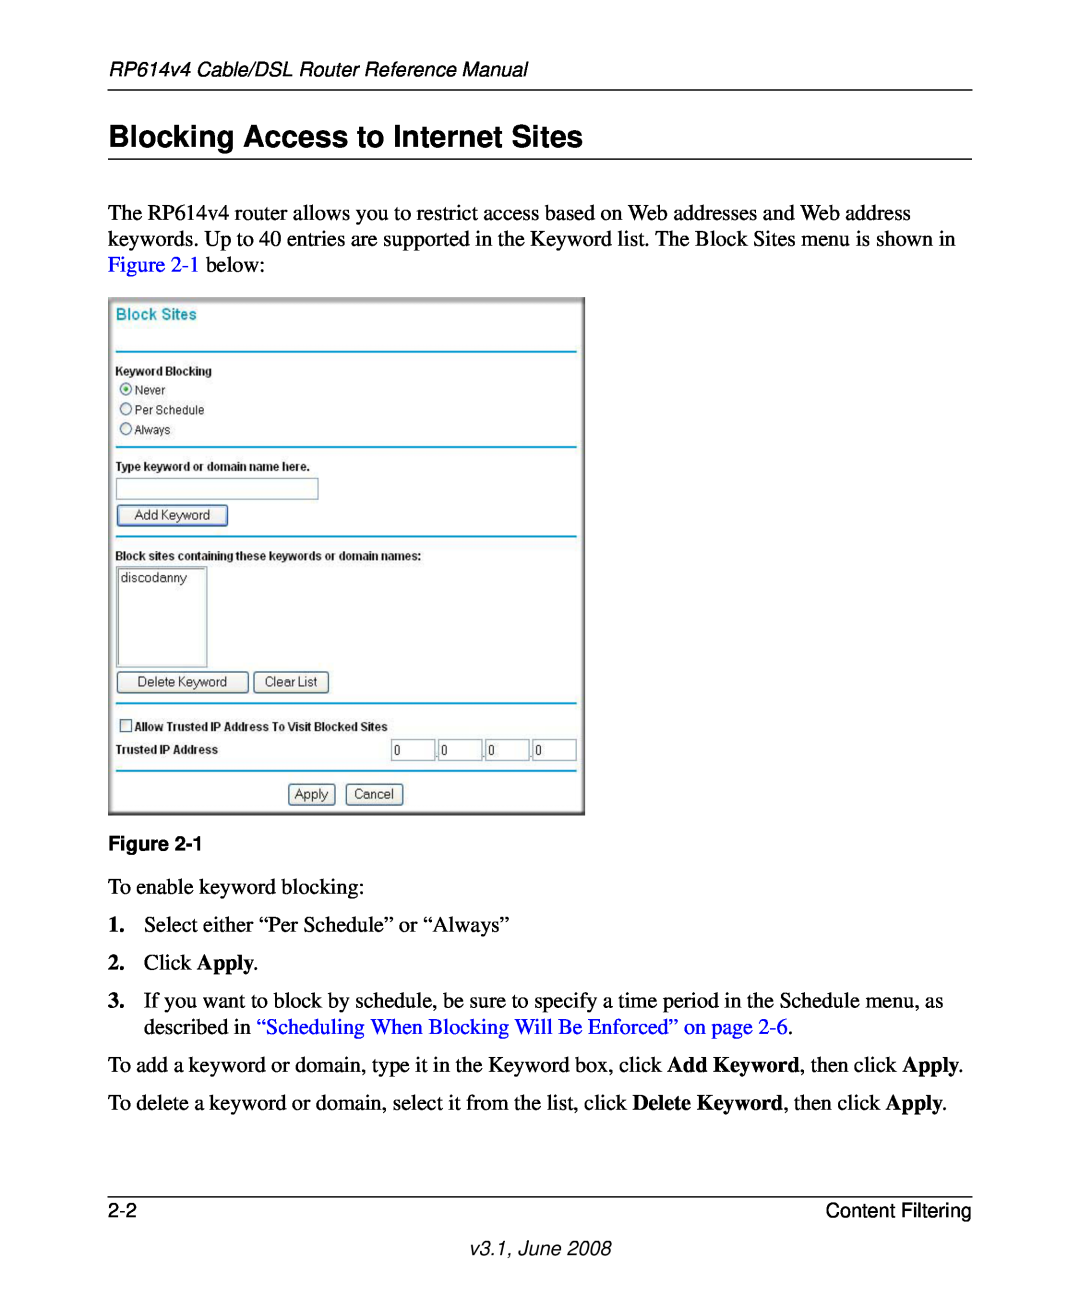 NETGEAR RP614 v4 manual Blocking Access to Internet Sites 